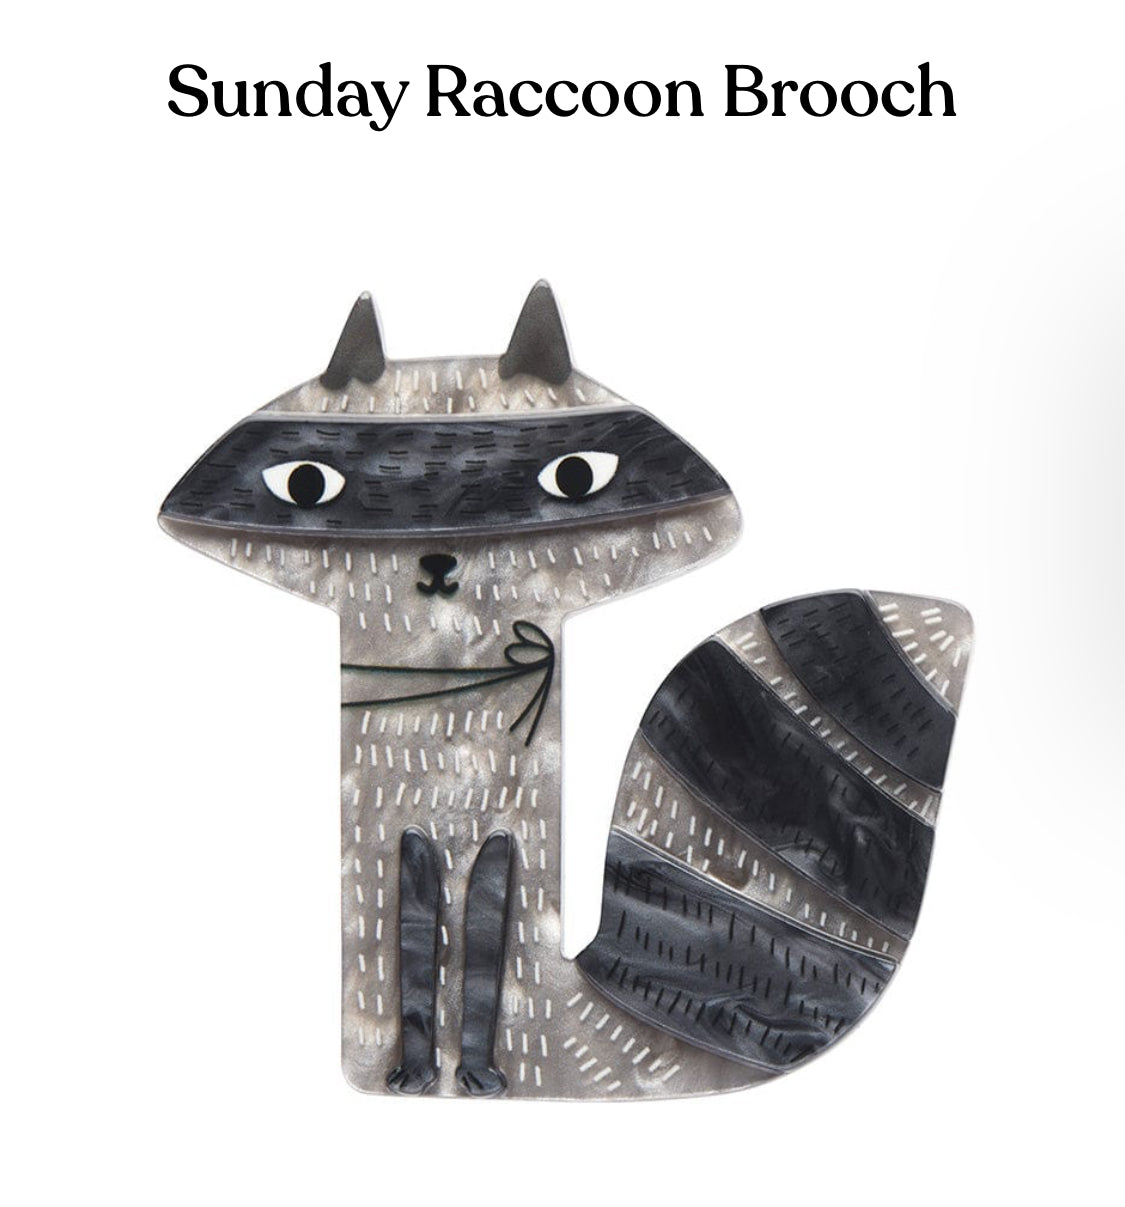 Sunday Raccoon Brooch